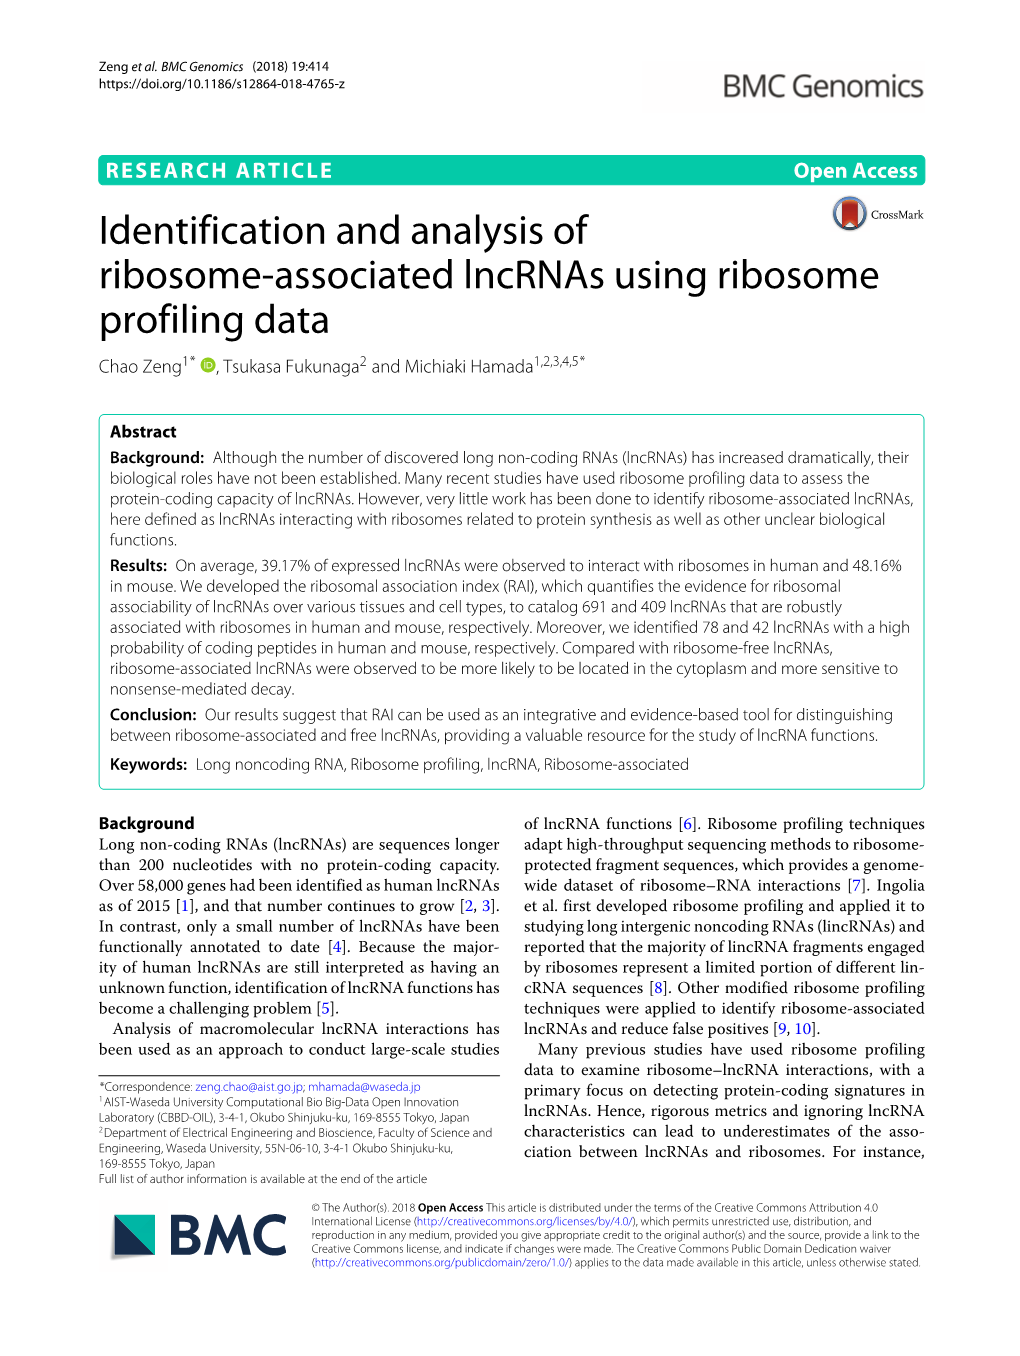 Identification and Analysis of Ribosome-Associated Lncrnas Using Ribosome Profiling Data Chao Zeng1* , Tsukasa Fukunaga2 and Michiaki Hamada1,2,3,4,5*